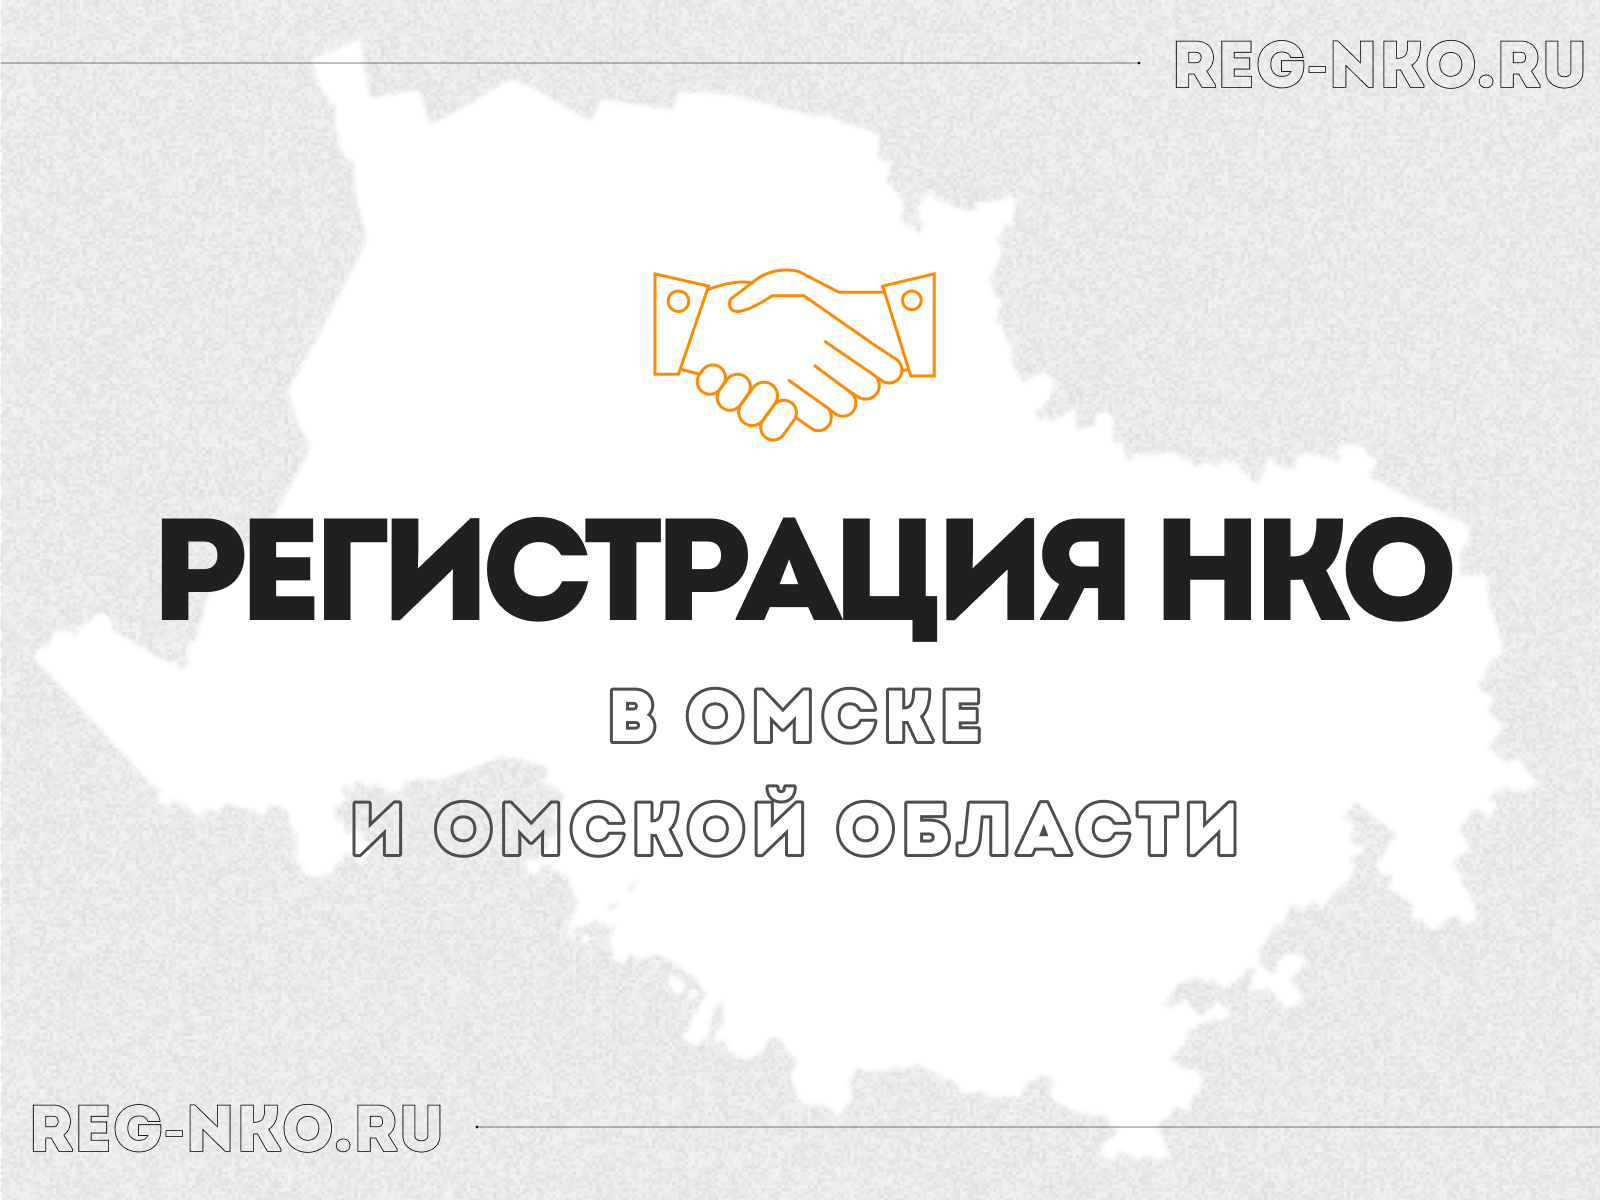 Регистрация НКО в Омске и Омской области